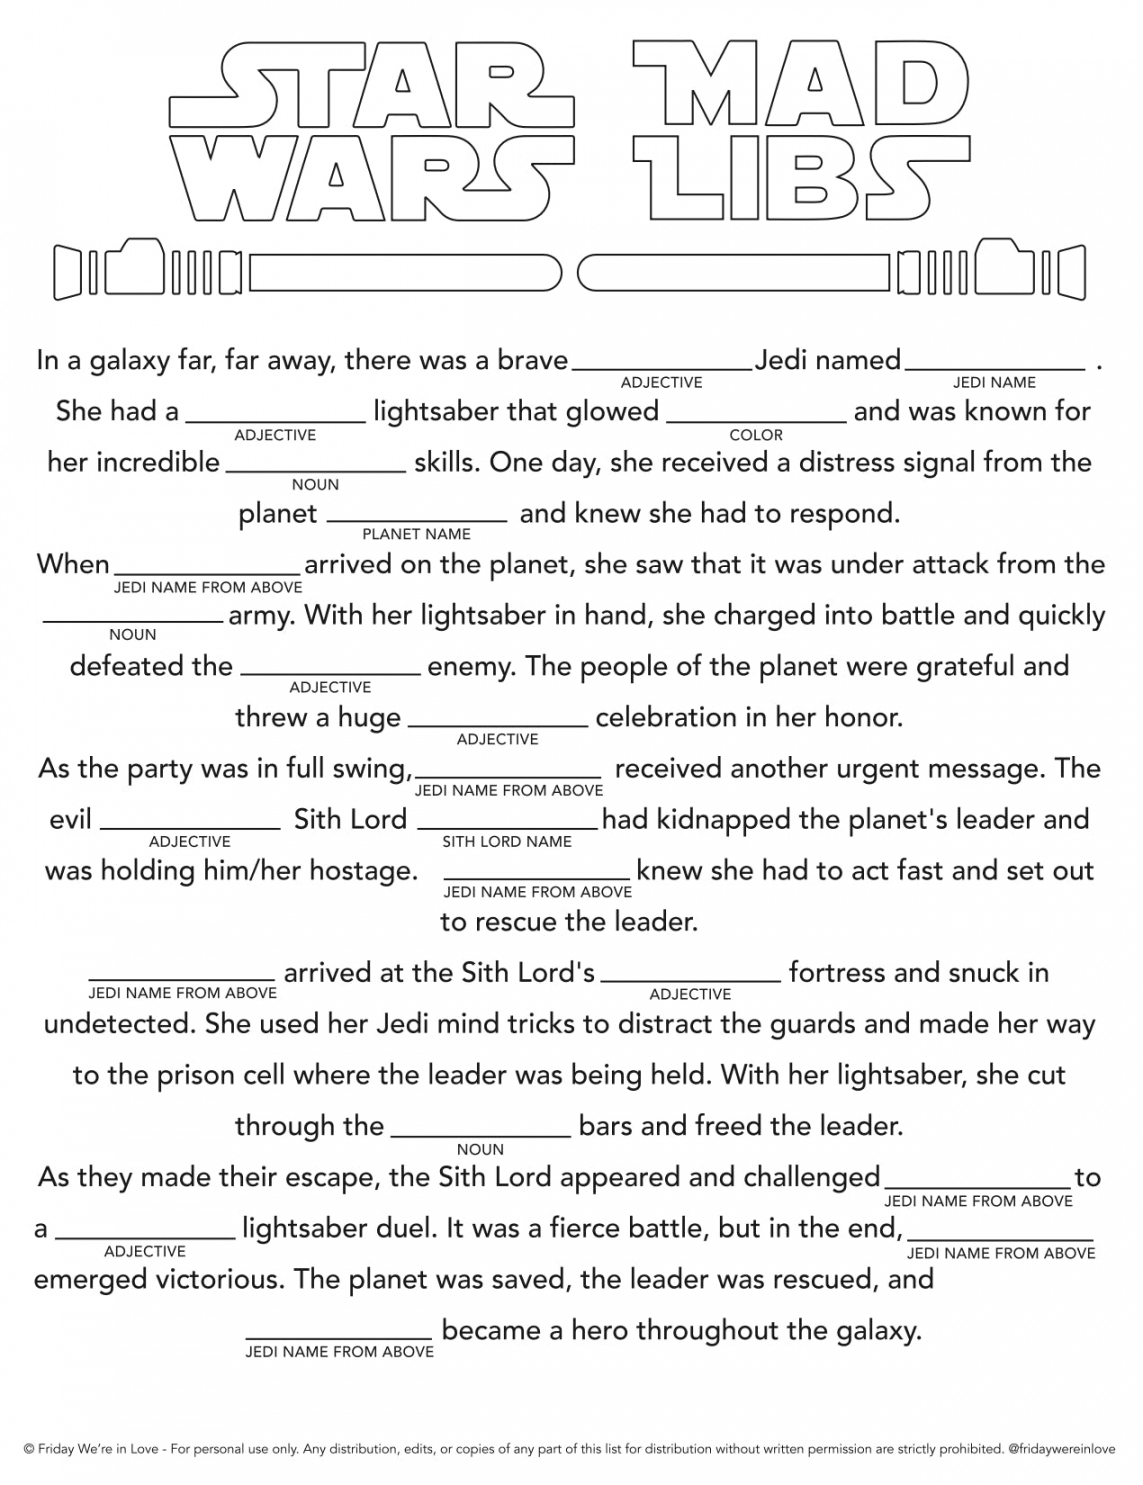 Star Wars Mad Libs Printable - Friday We